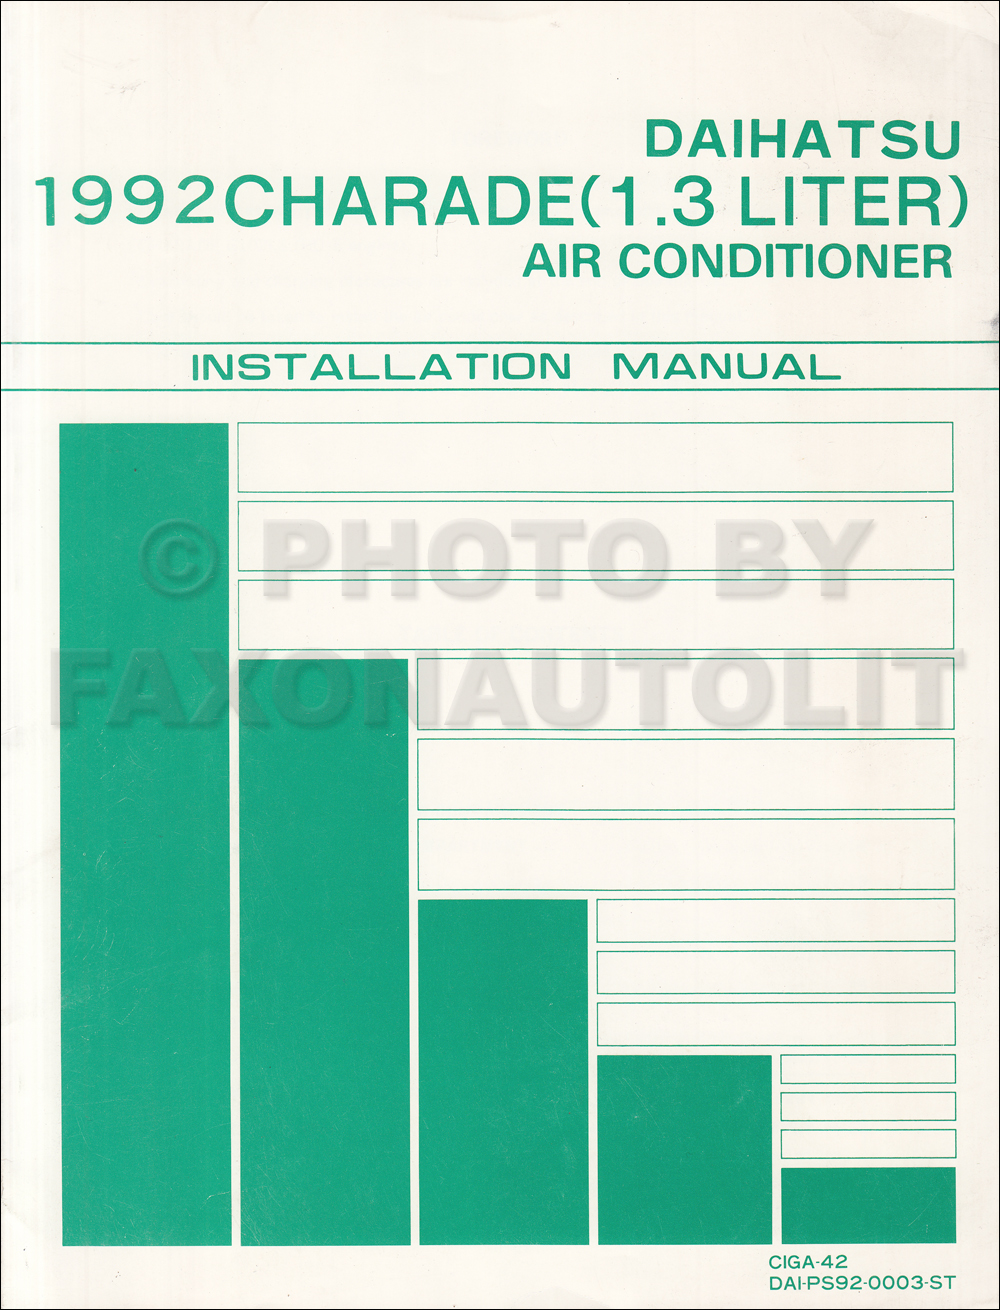 1992 Daihatsu Charade Air Conditioner Installation Manual Original 1.3 Liter